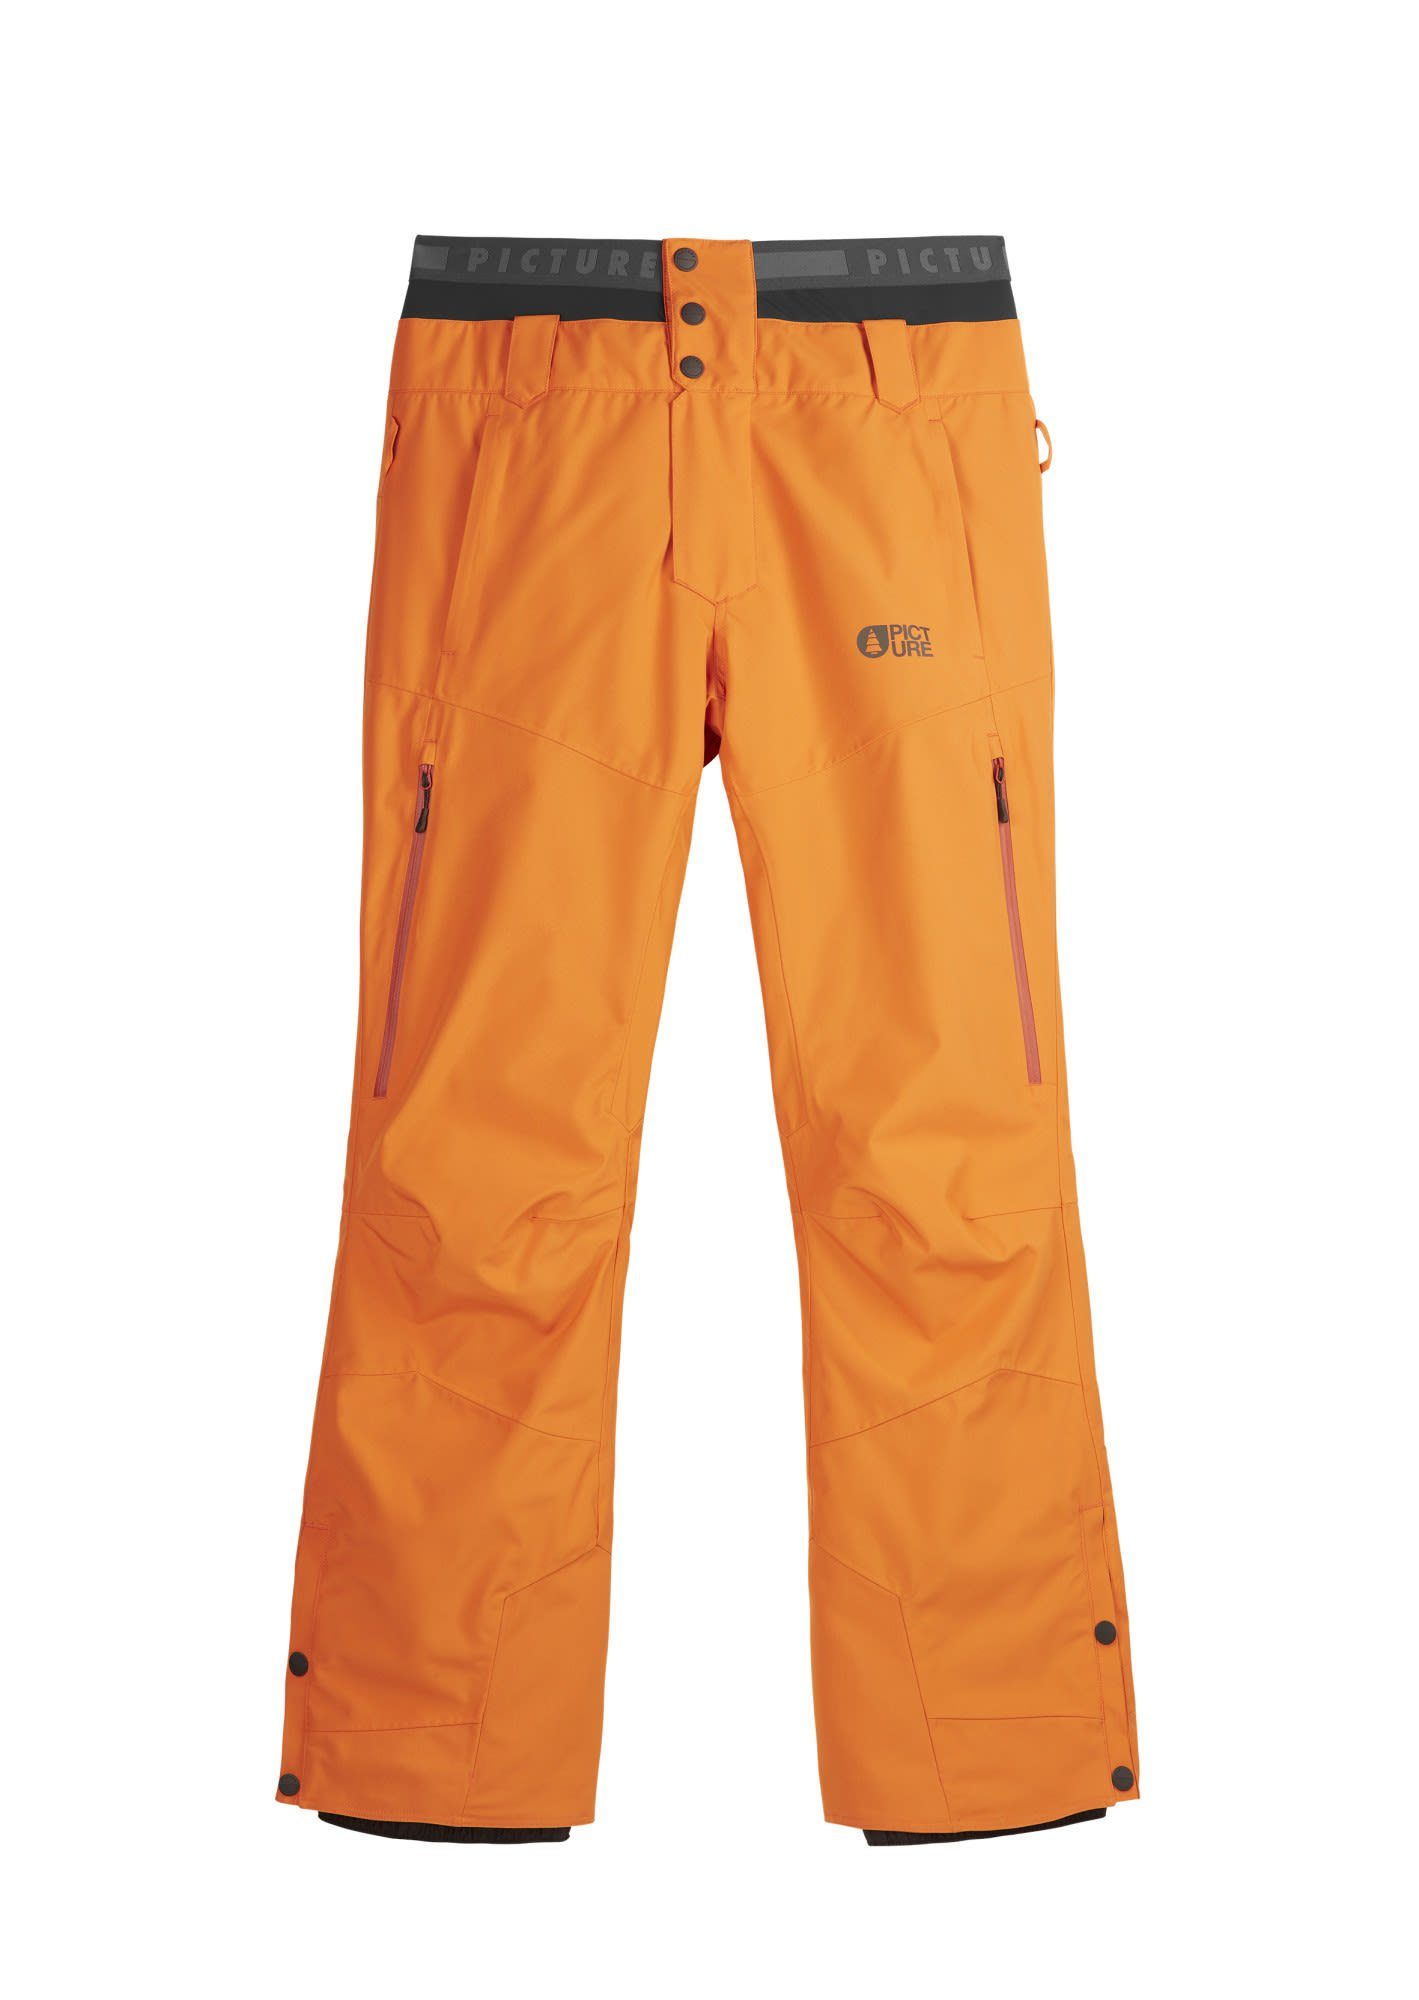 Herren Hose Hose Picture & Picture Pants Object Picture M orange Shorts